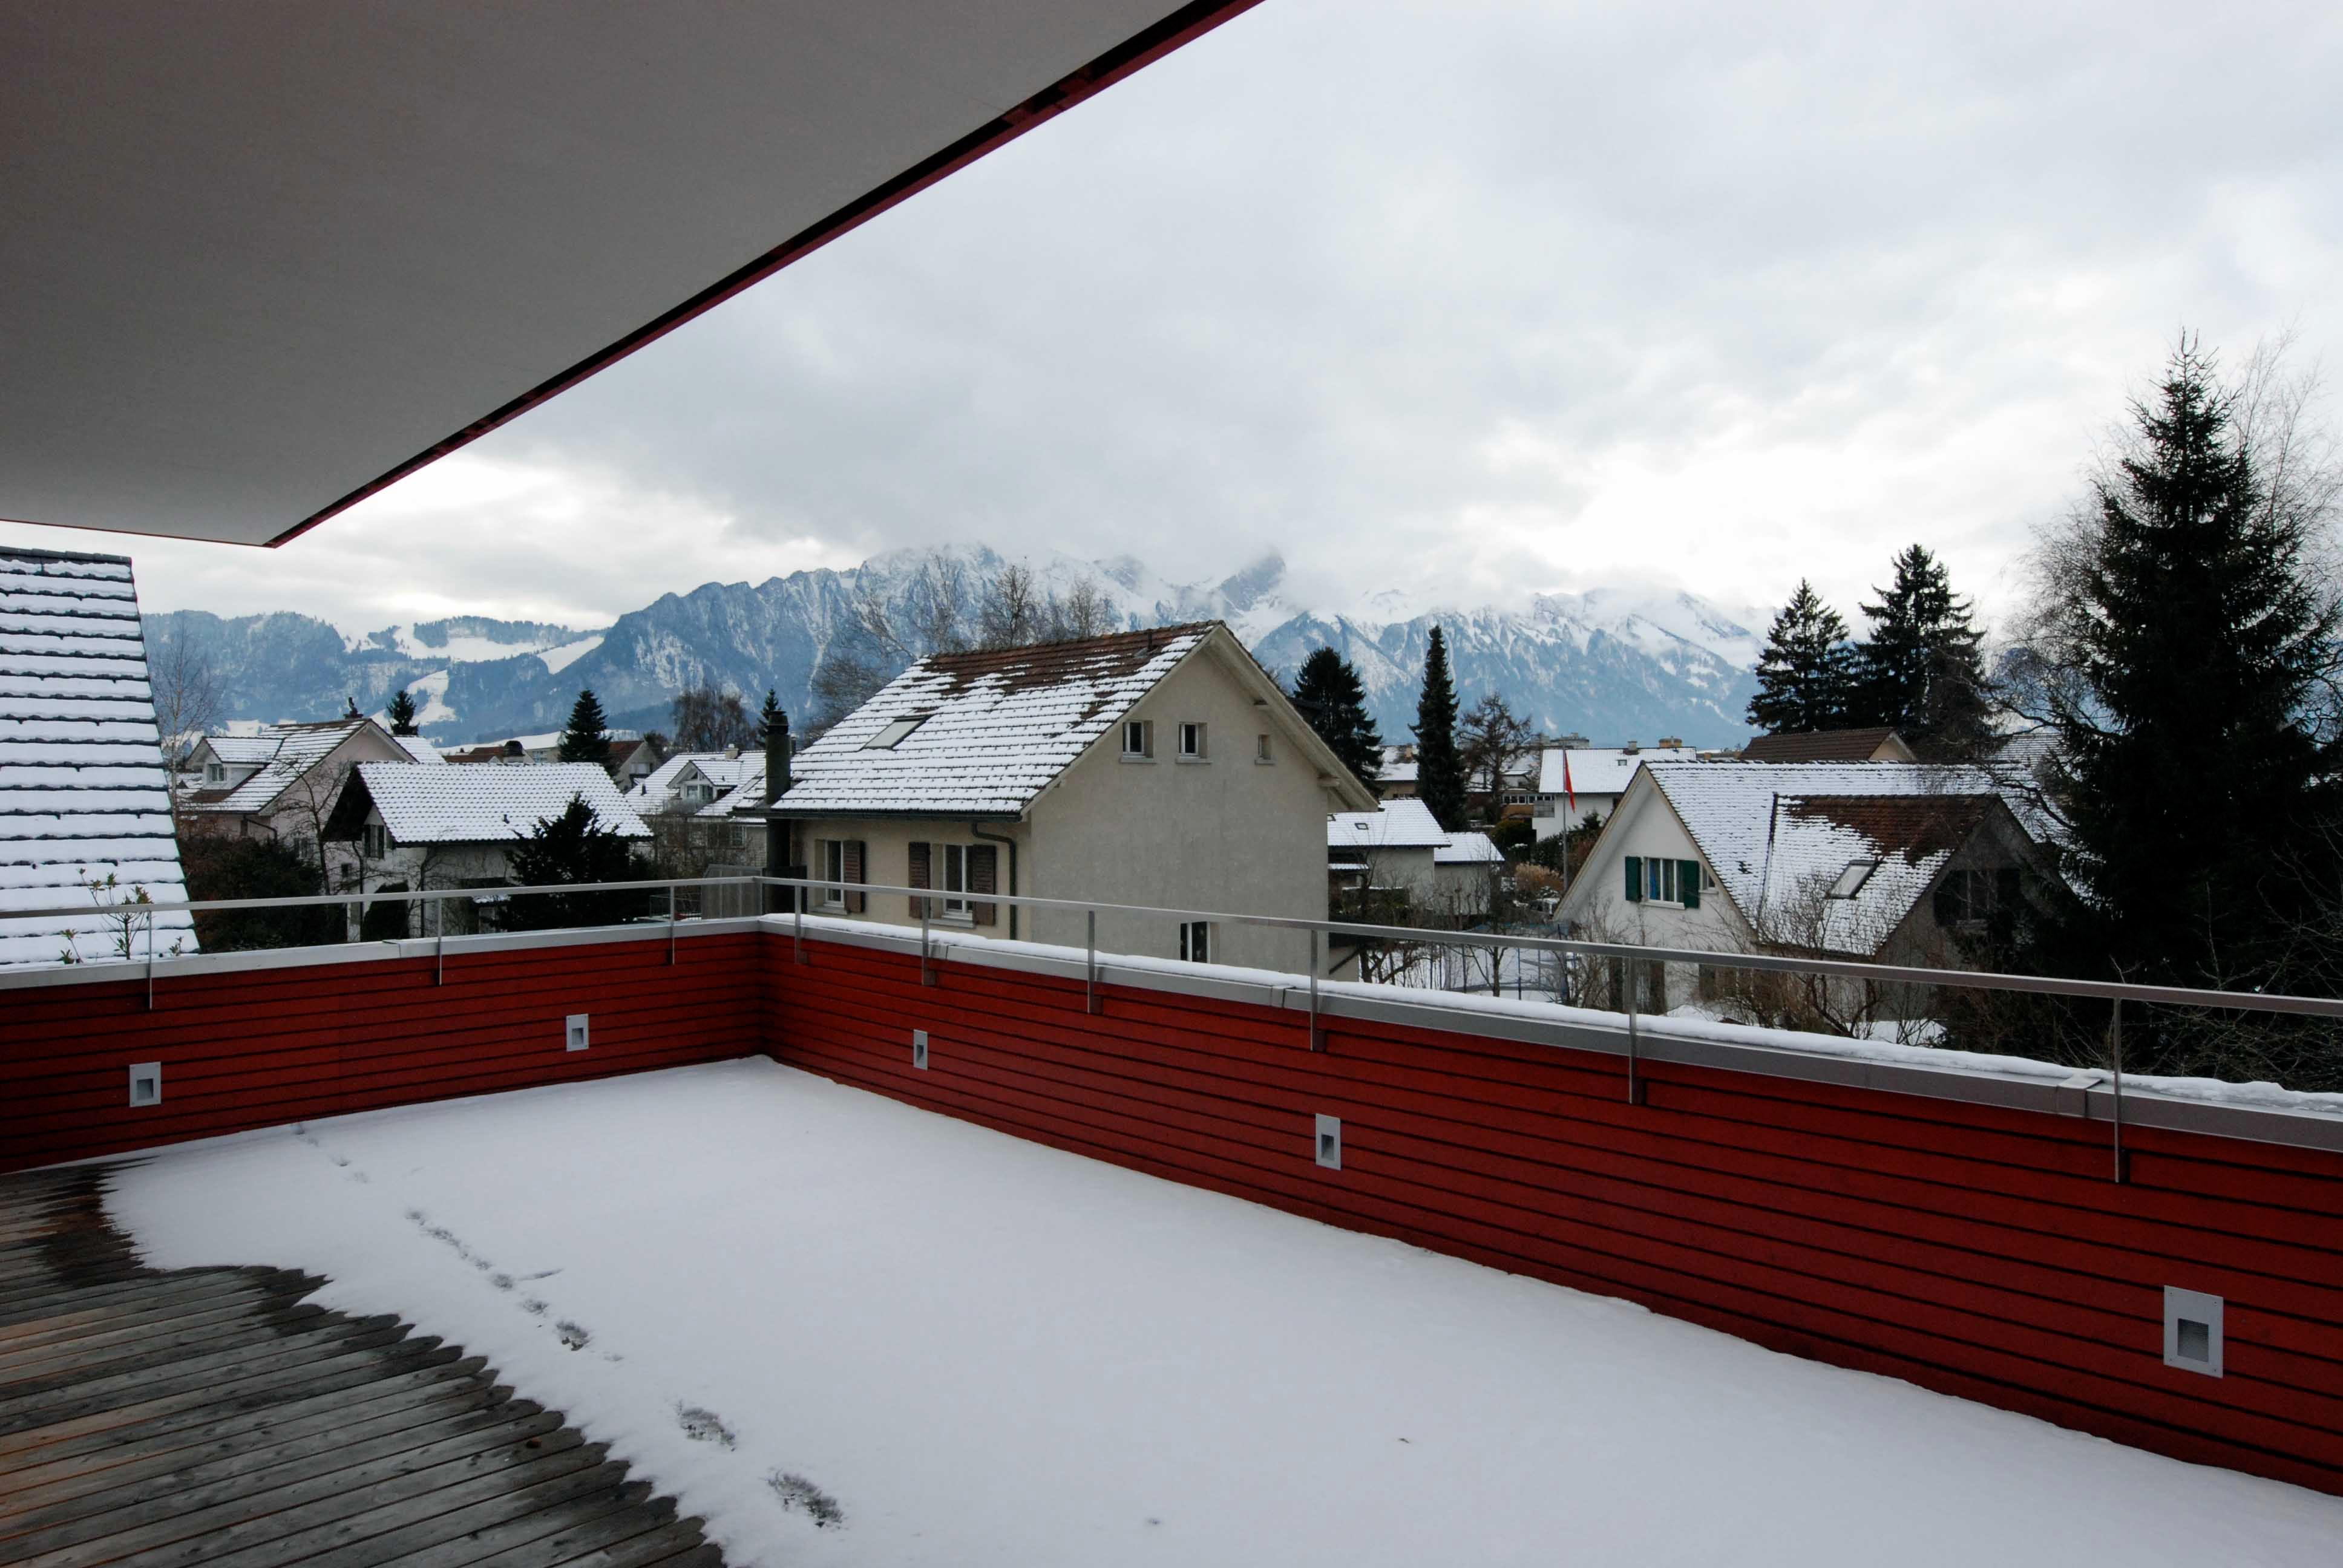  Architektur-Reportage Thun roter Kubus: Ausblick von Terasse ins Berner Oberland